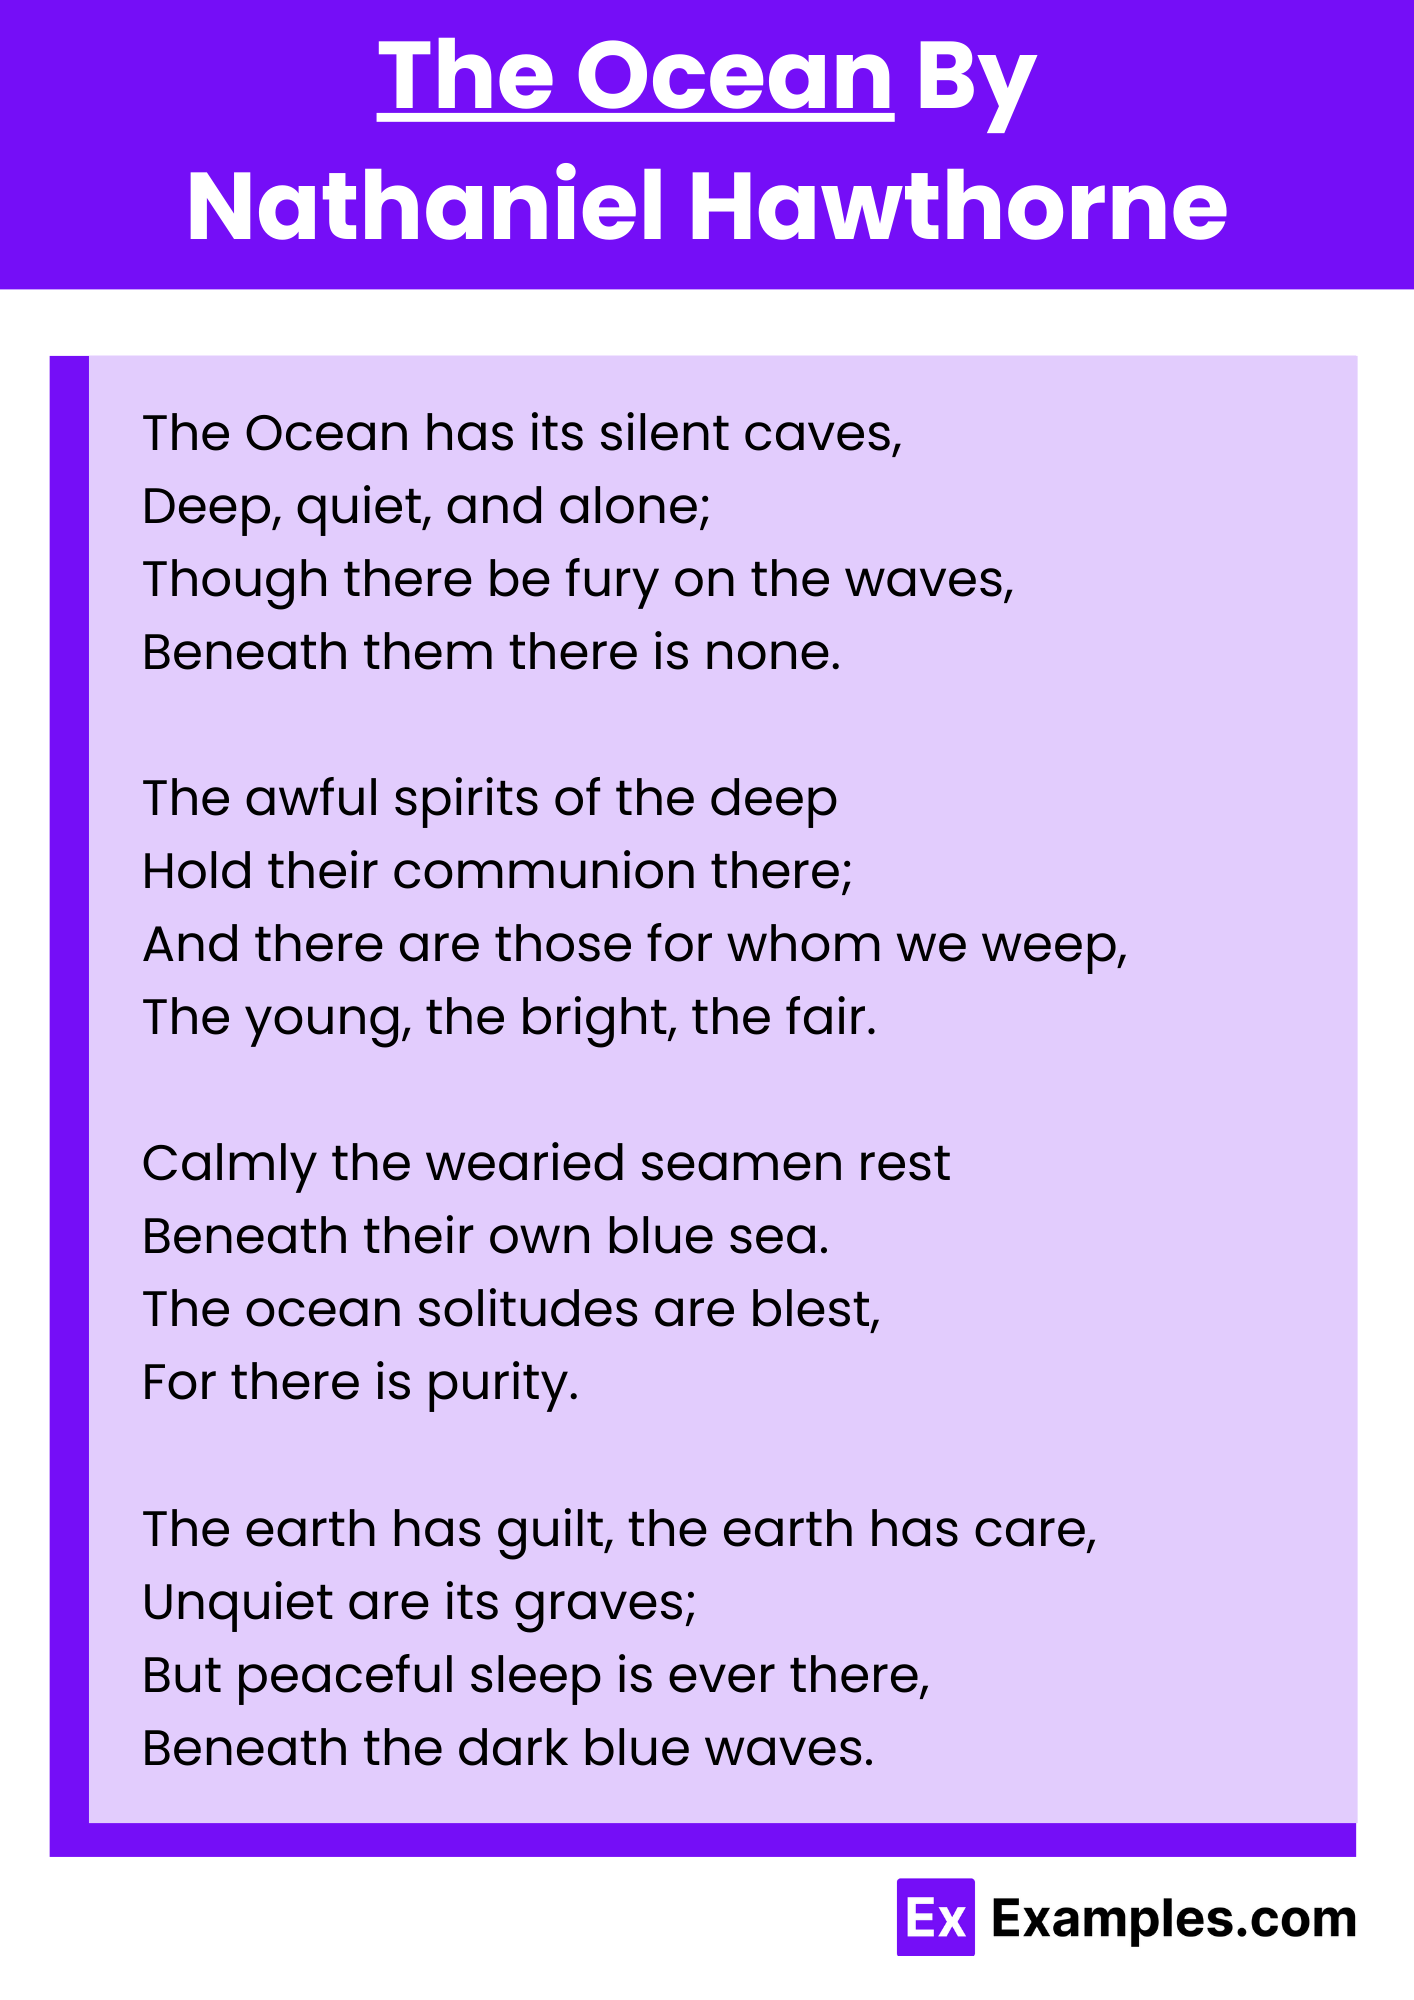 The Ocean By Nathaniel Hawthorne